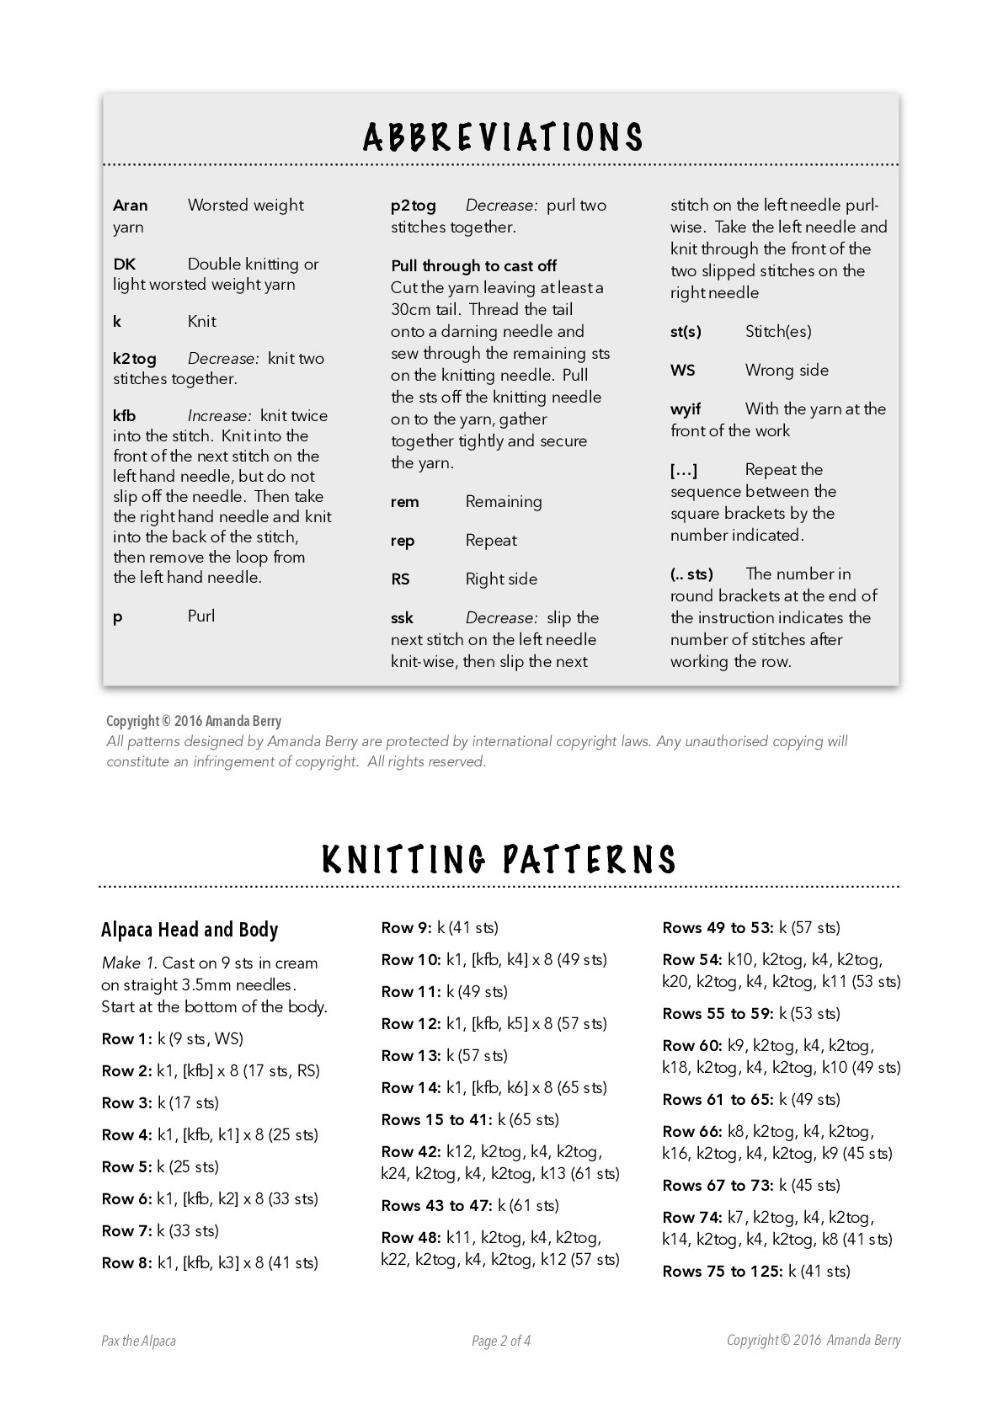 PAX the ALPACA knitting patterns